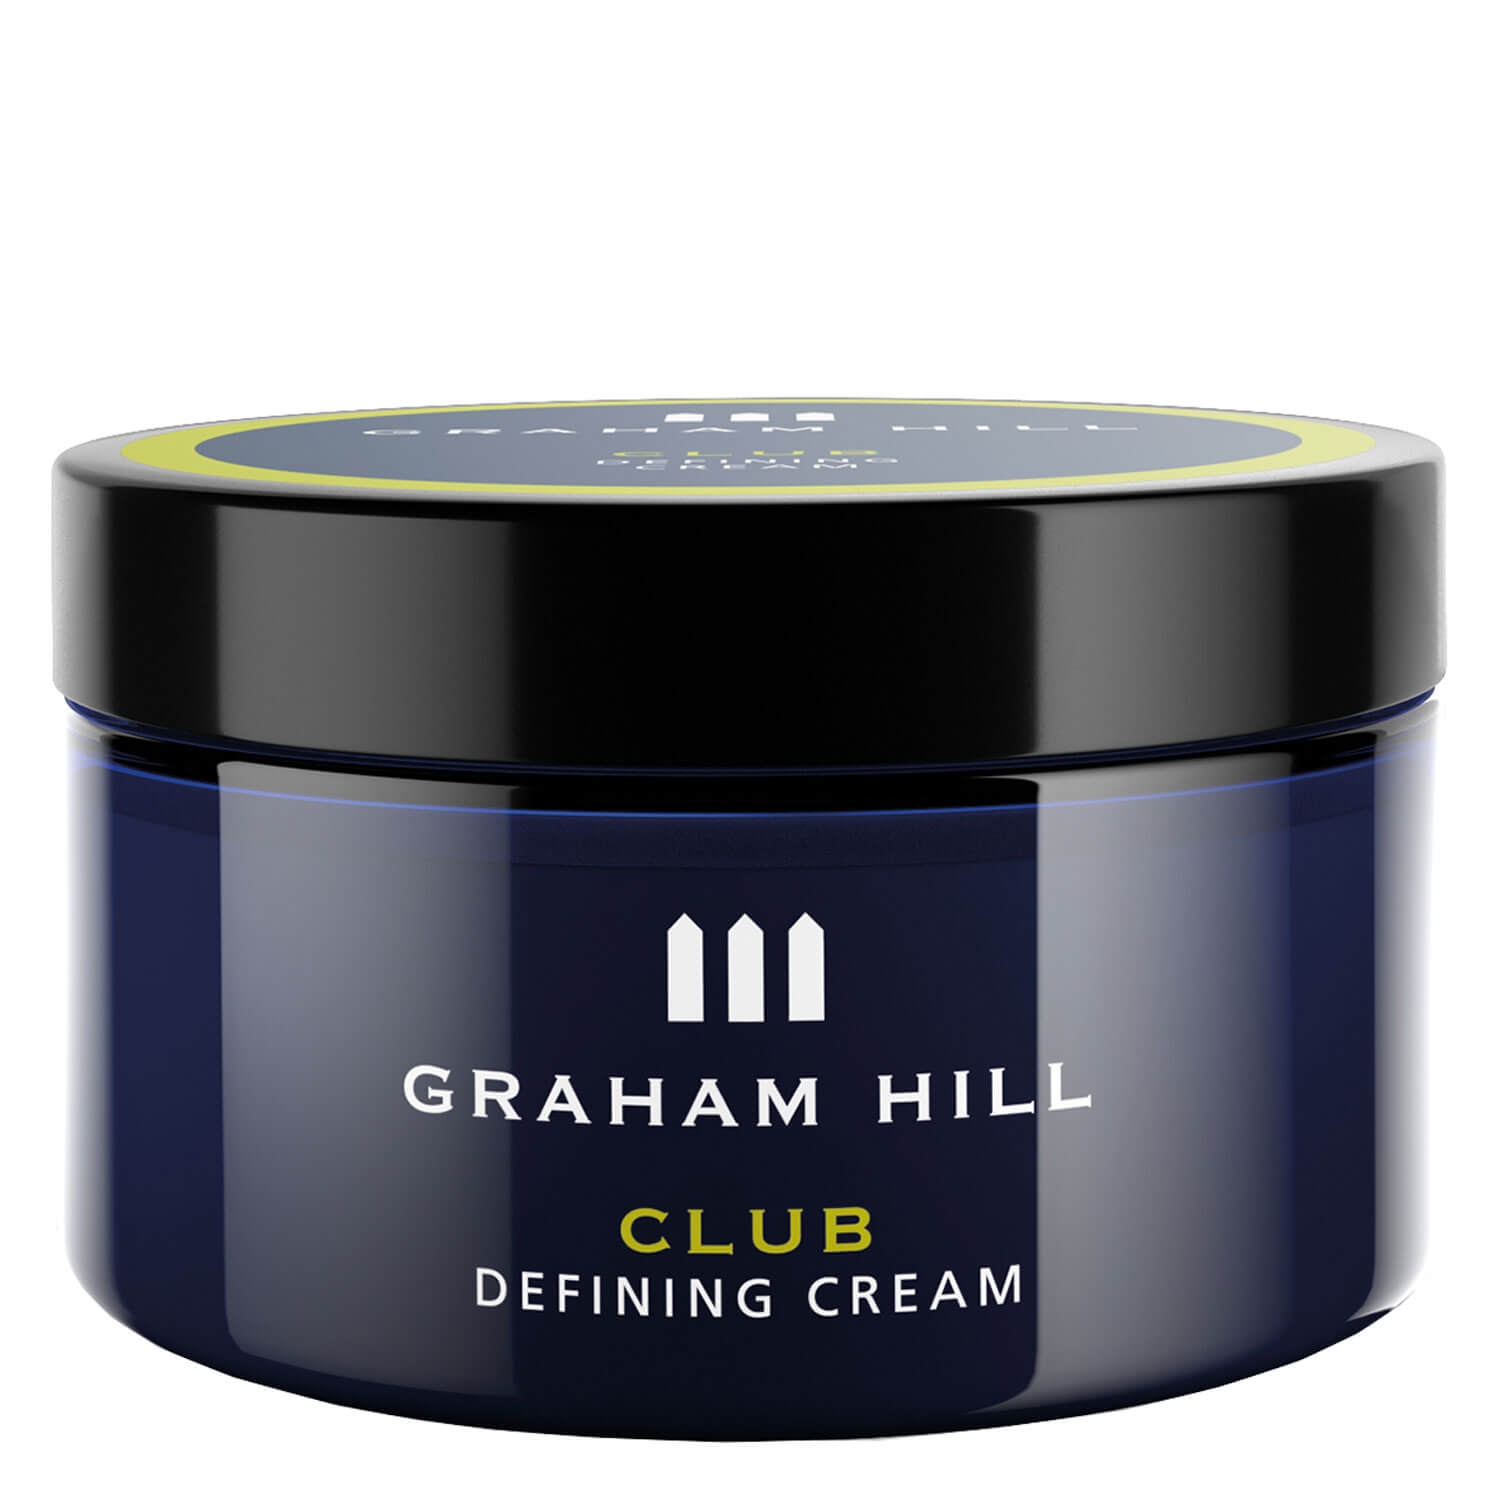 Image du produit de Styling & Grooming - Club Defining Cream